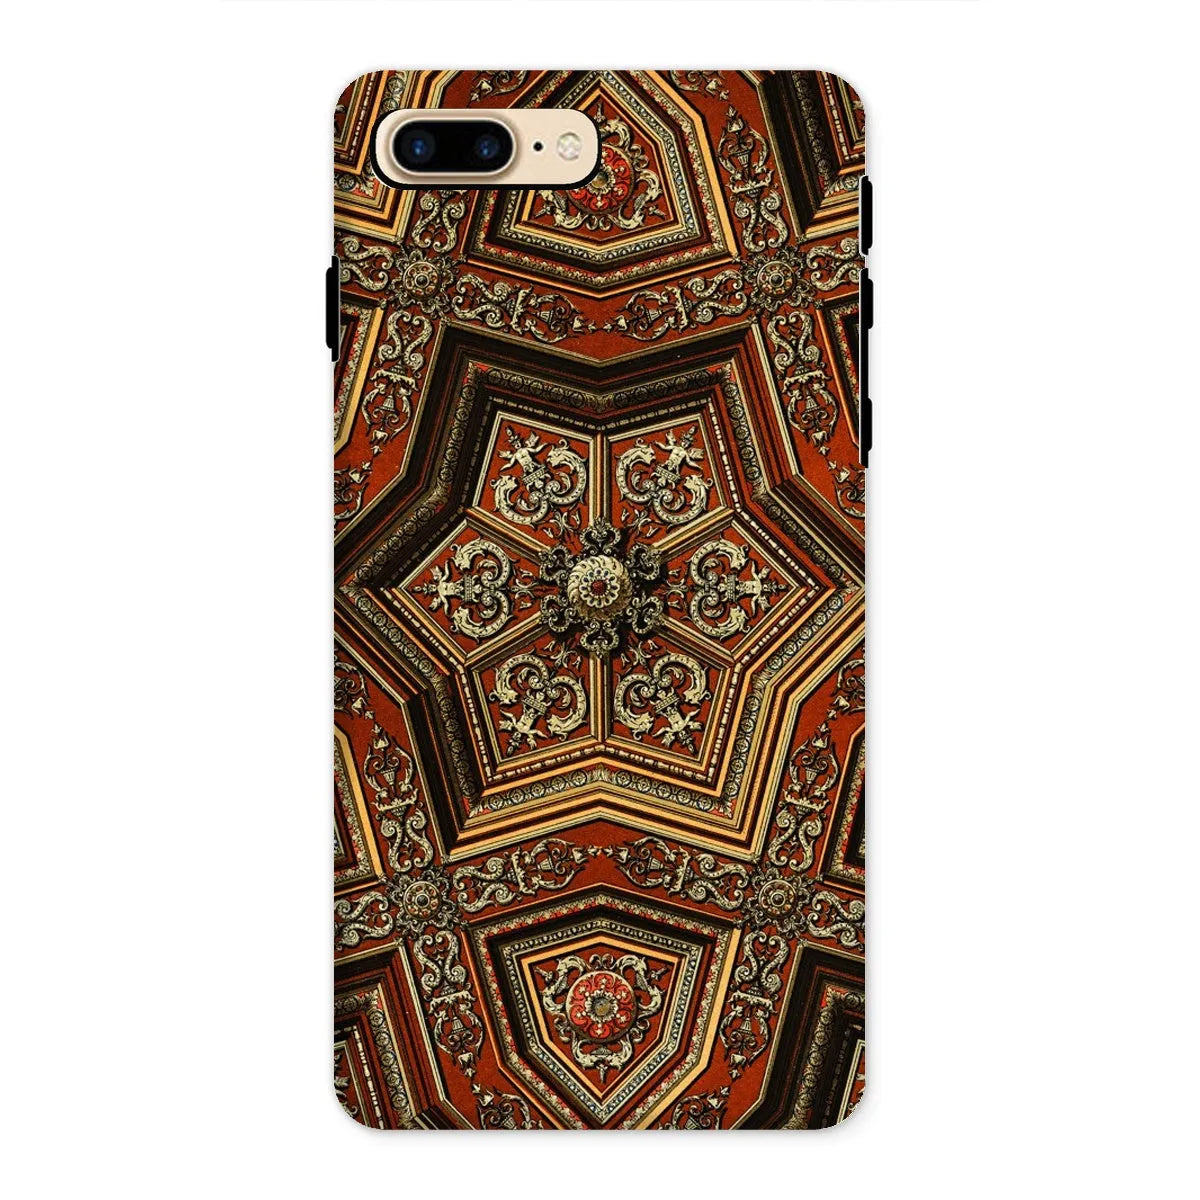 Renaissance Pattern By Auguste Racinet Tough Phone Case - Iphone 8 Plus / Gloss - Mobile Phone Cases - Aesthetic Art